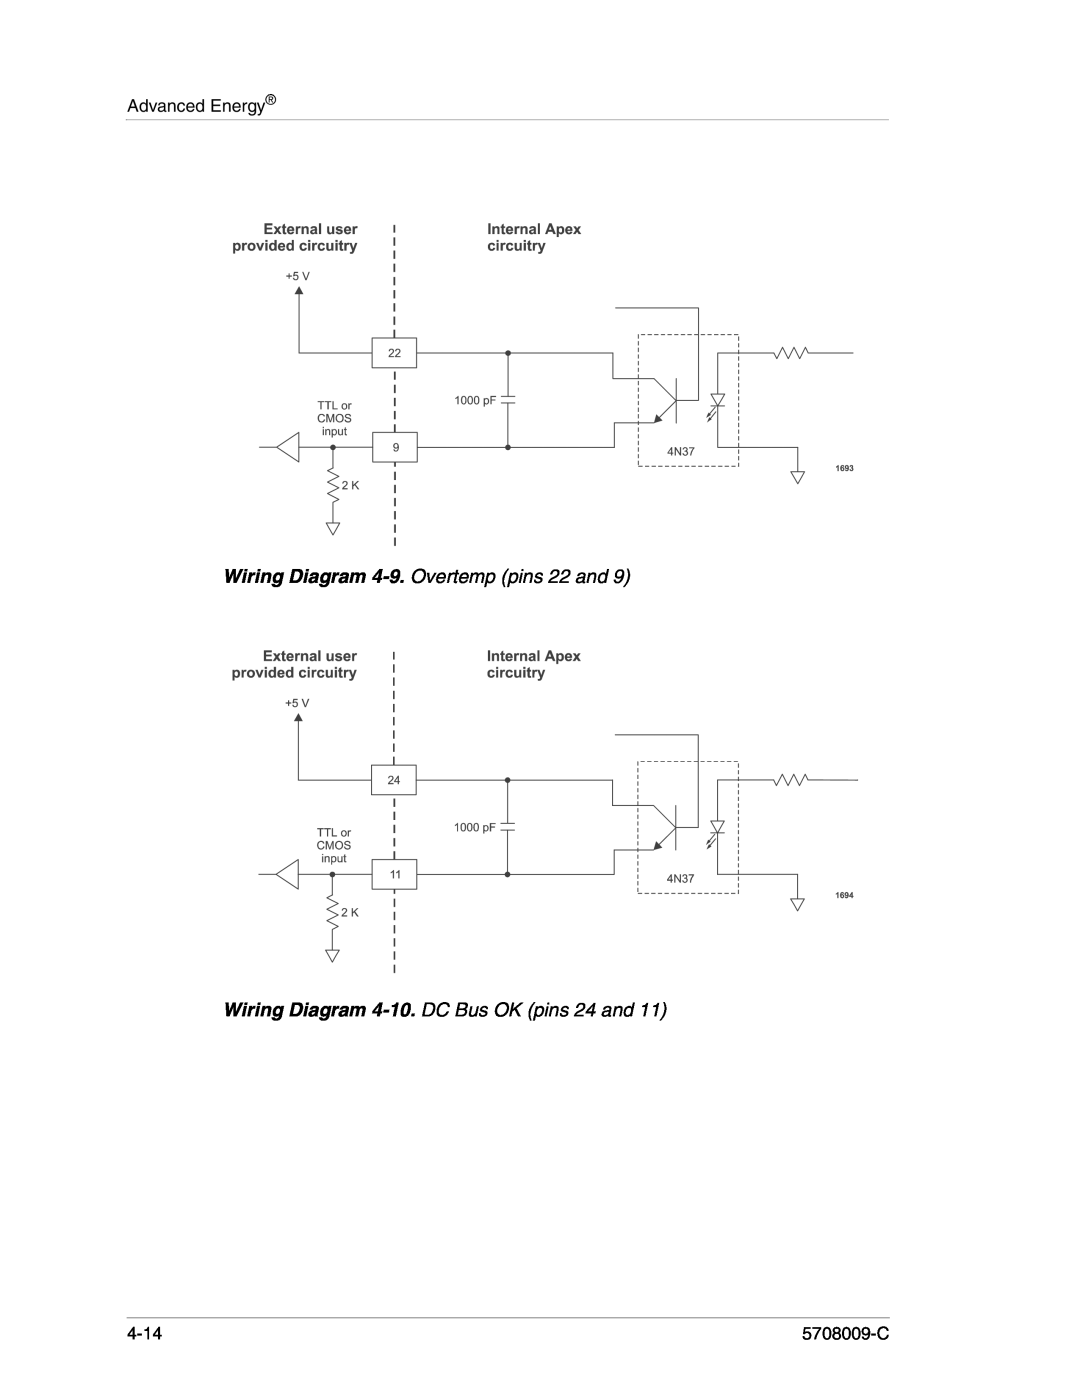 Apex Digital 5708009-C manual Wiring Diagram 4-9. Overtemp pins 22 and, Wiring Diagram 4-10. DC Bus OK pins 24 and, 4-14 